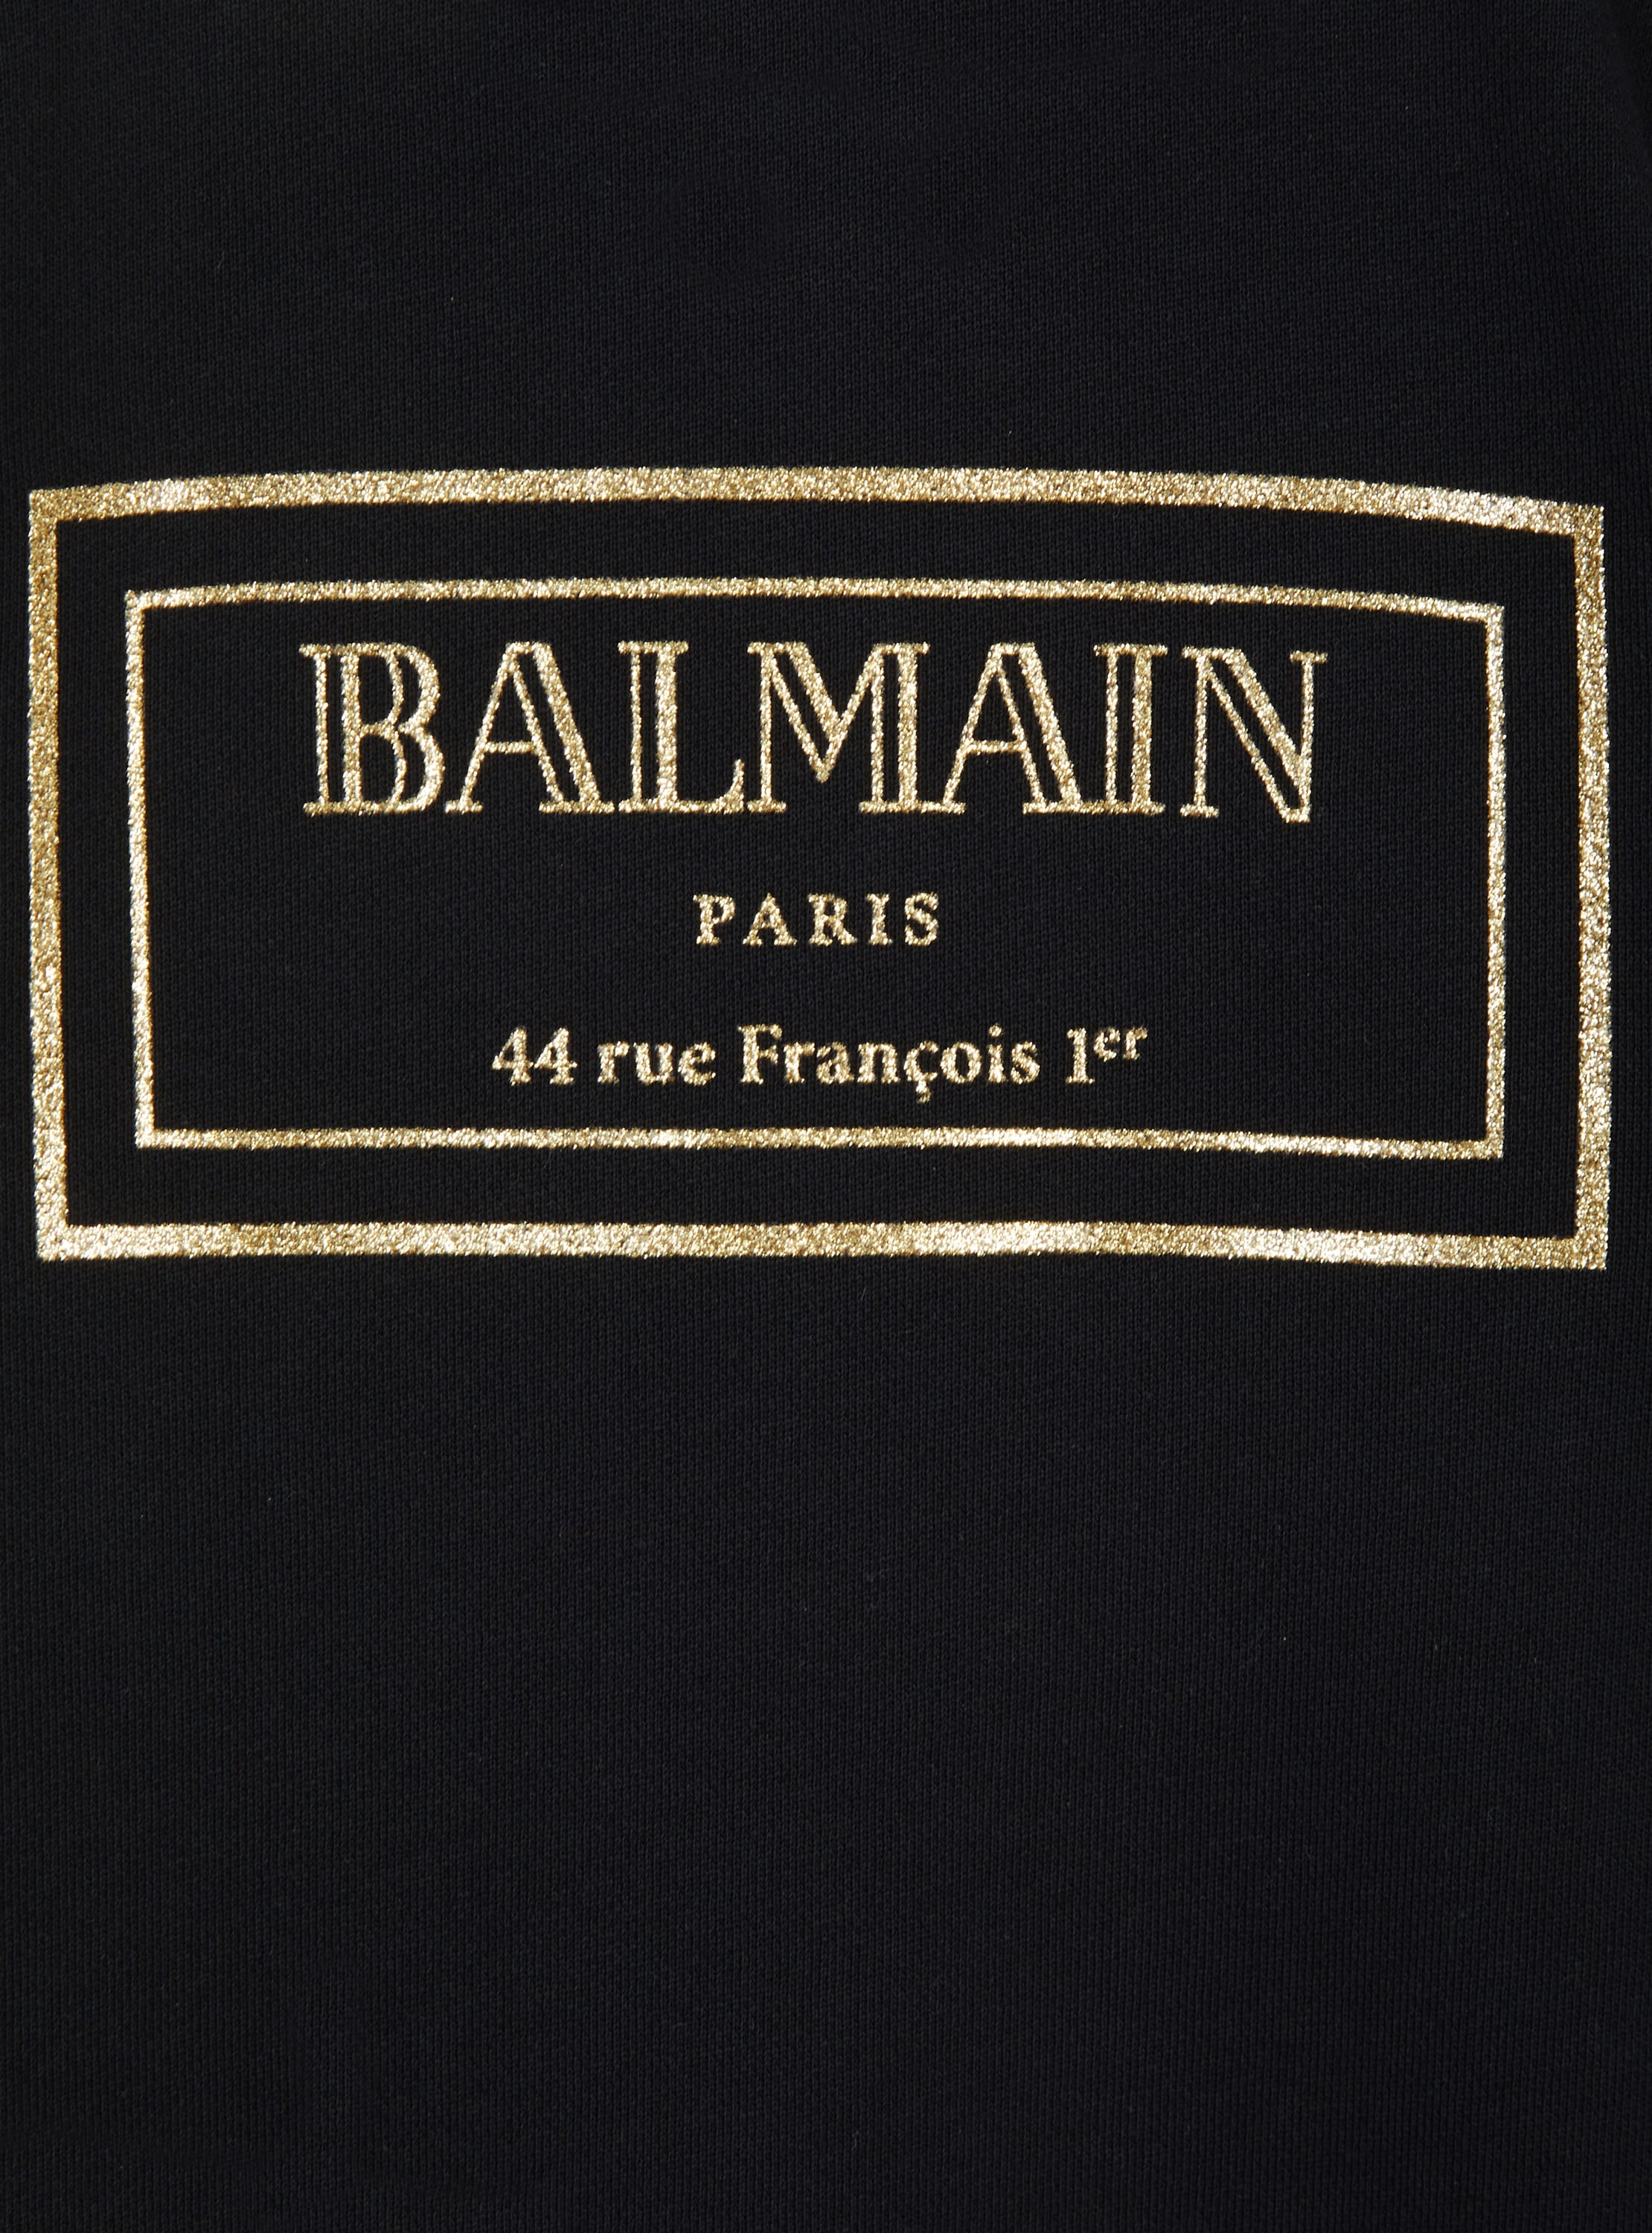 Balmain Paris sweatshirt dress